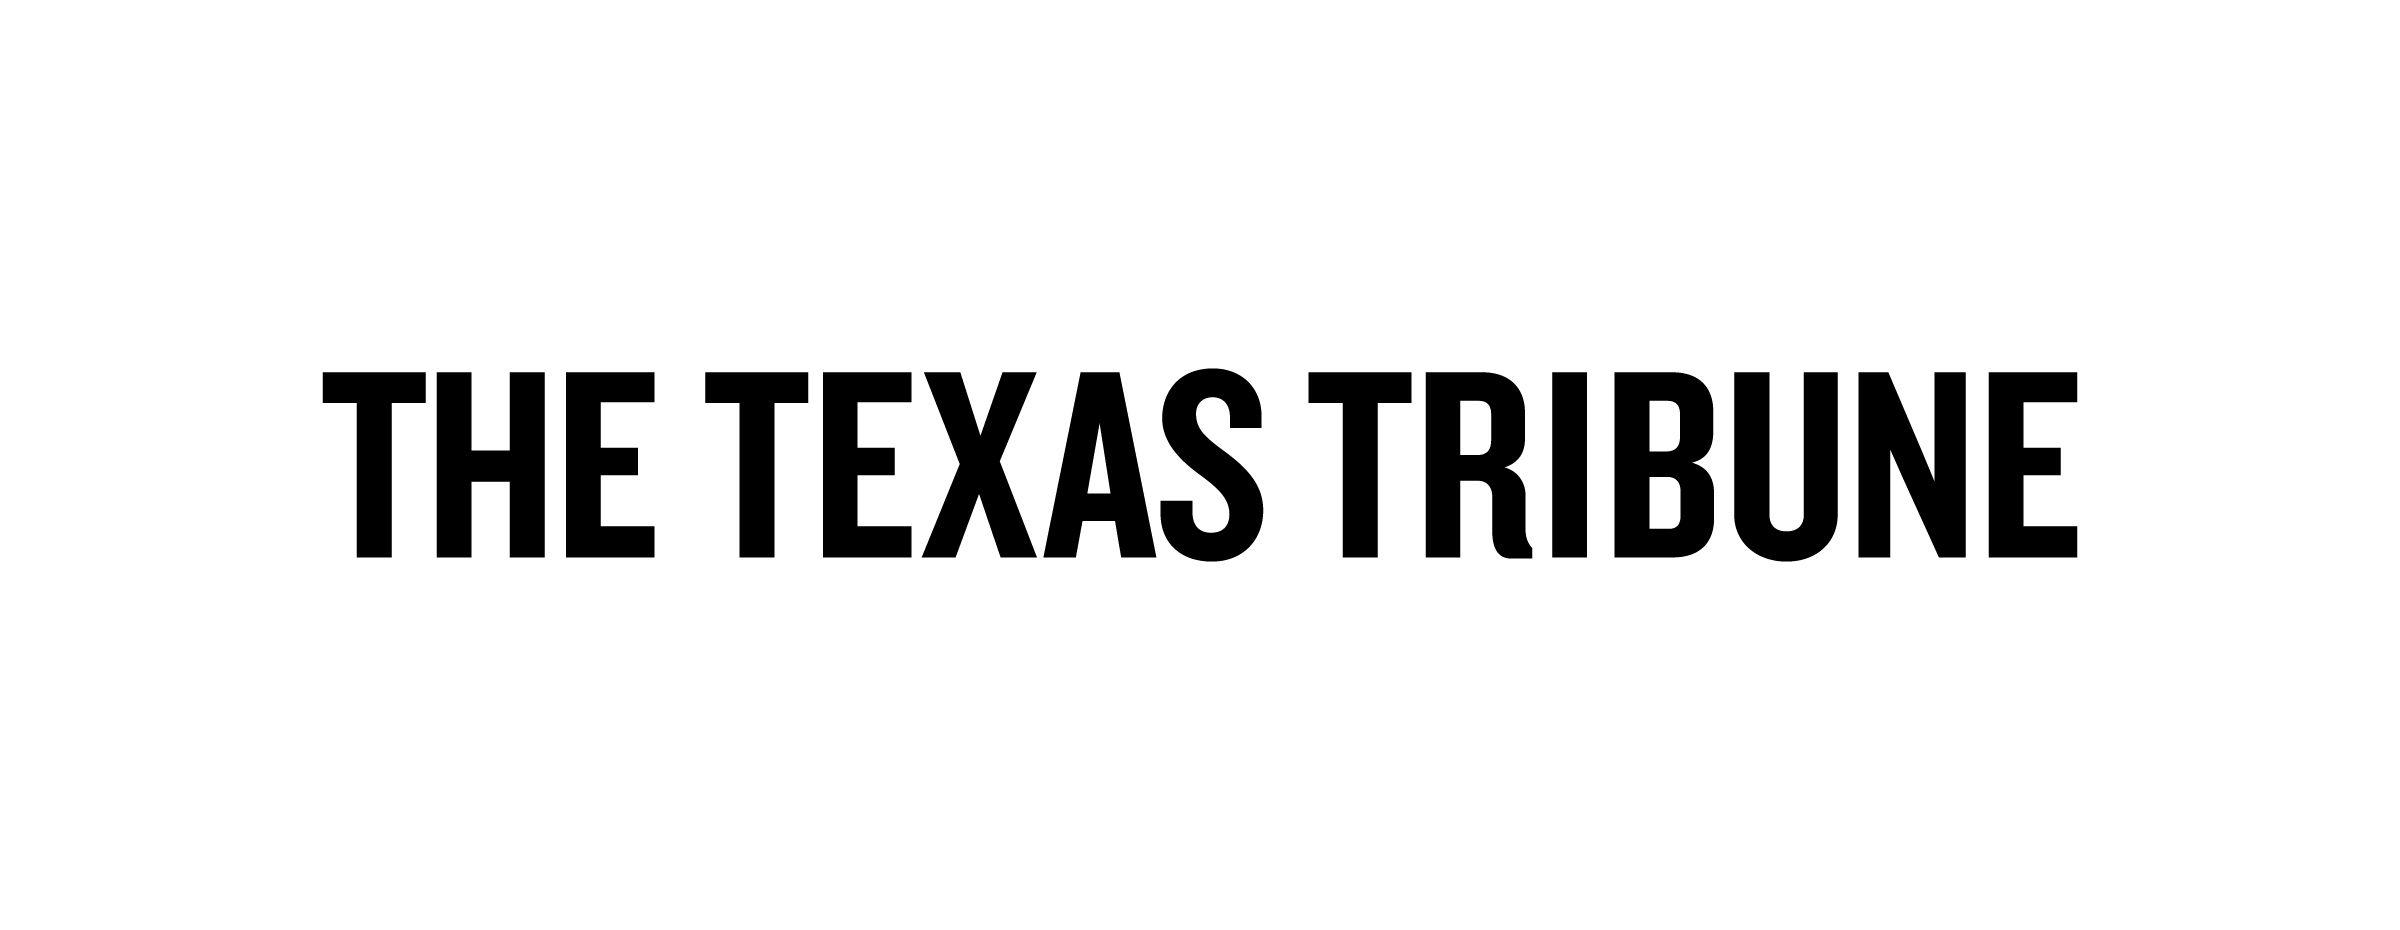 Tribune Logo - Downloads. The Texas Tribune